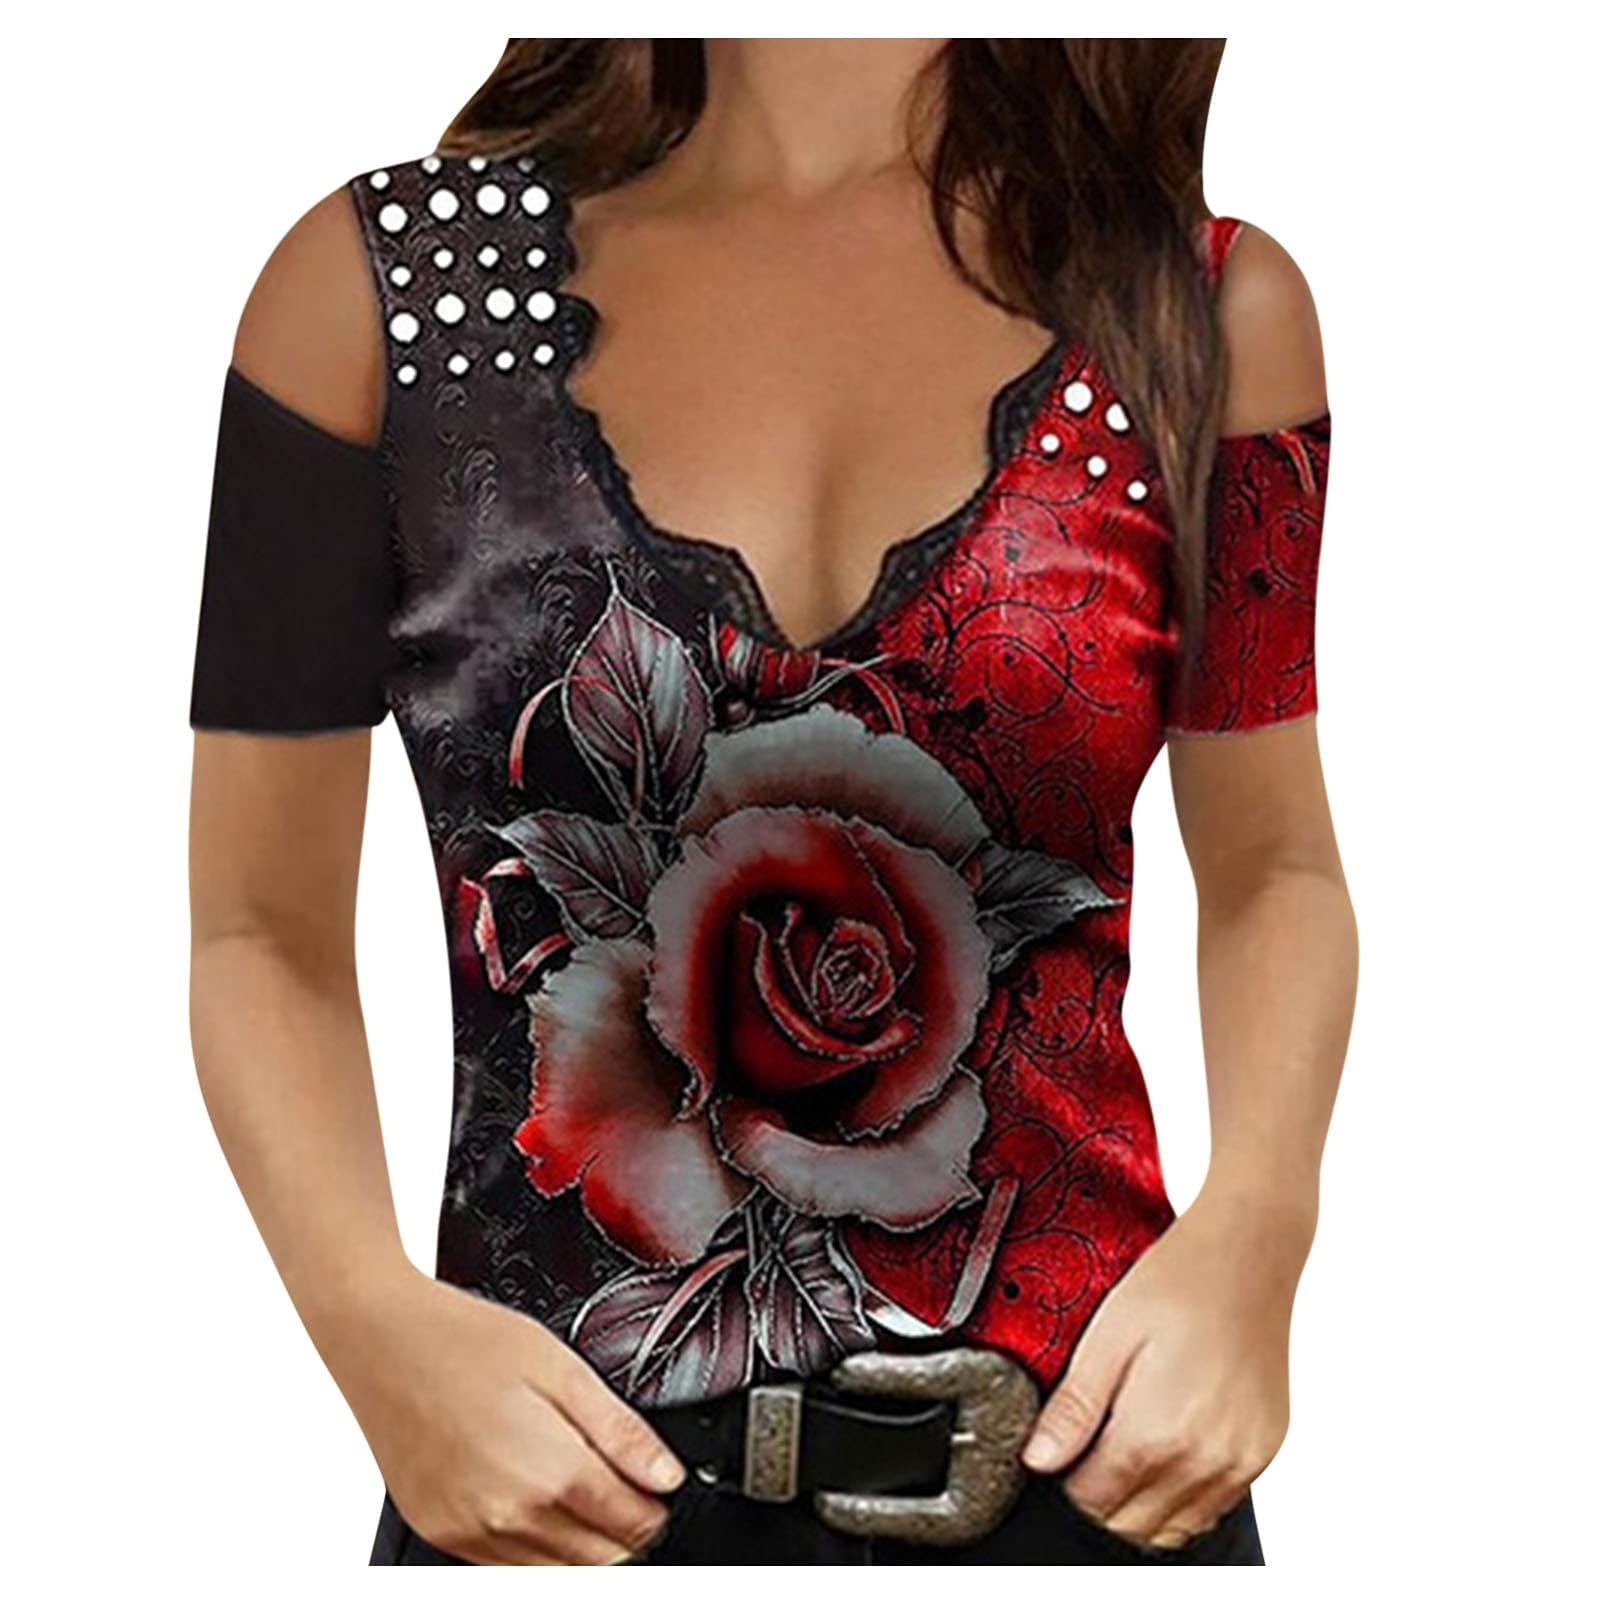 Black Metal Off Shoulder  lace shirt with red rose